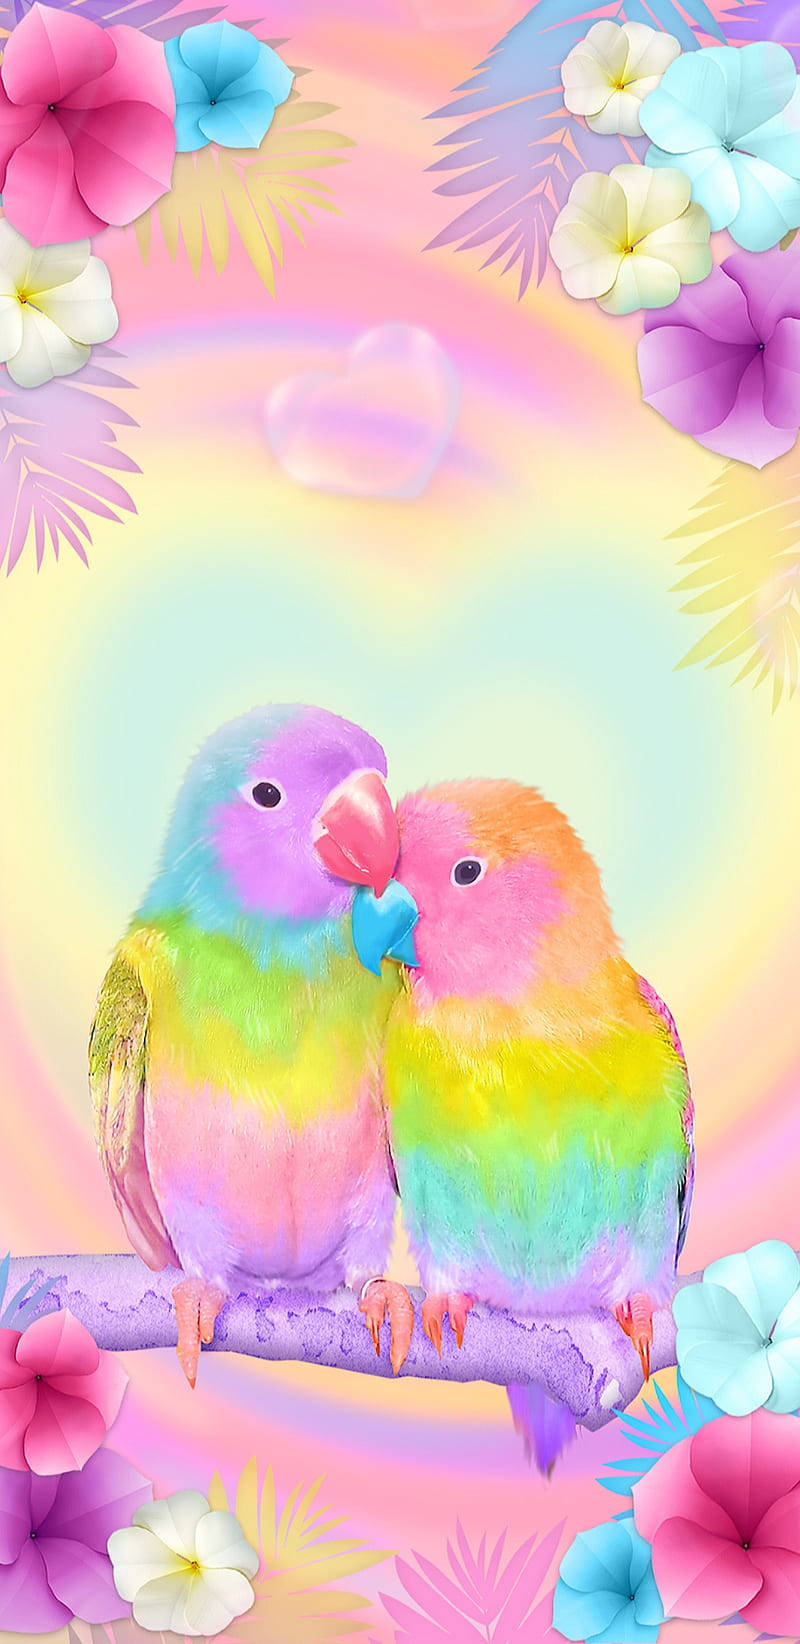 Bezauberndepinkfarbene Papageienvögel Wallpaper